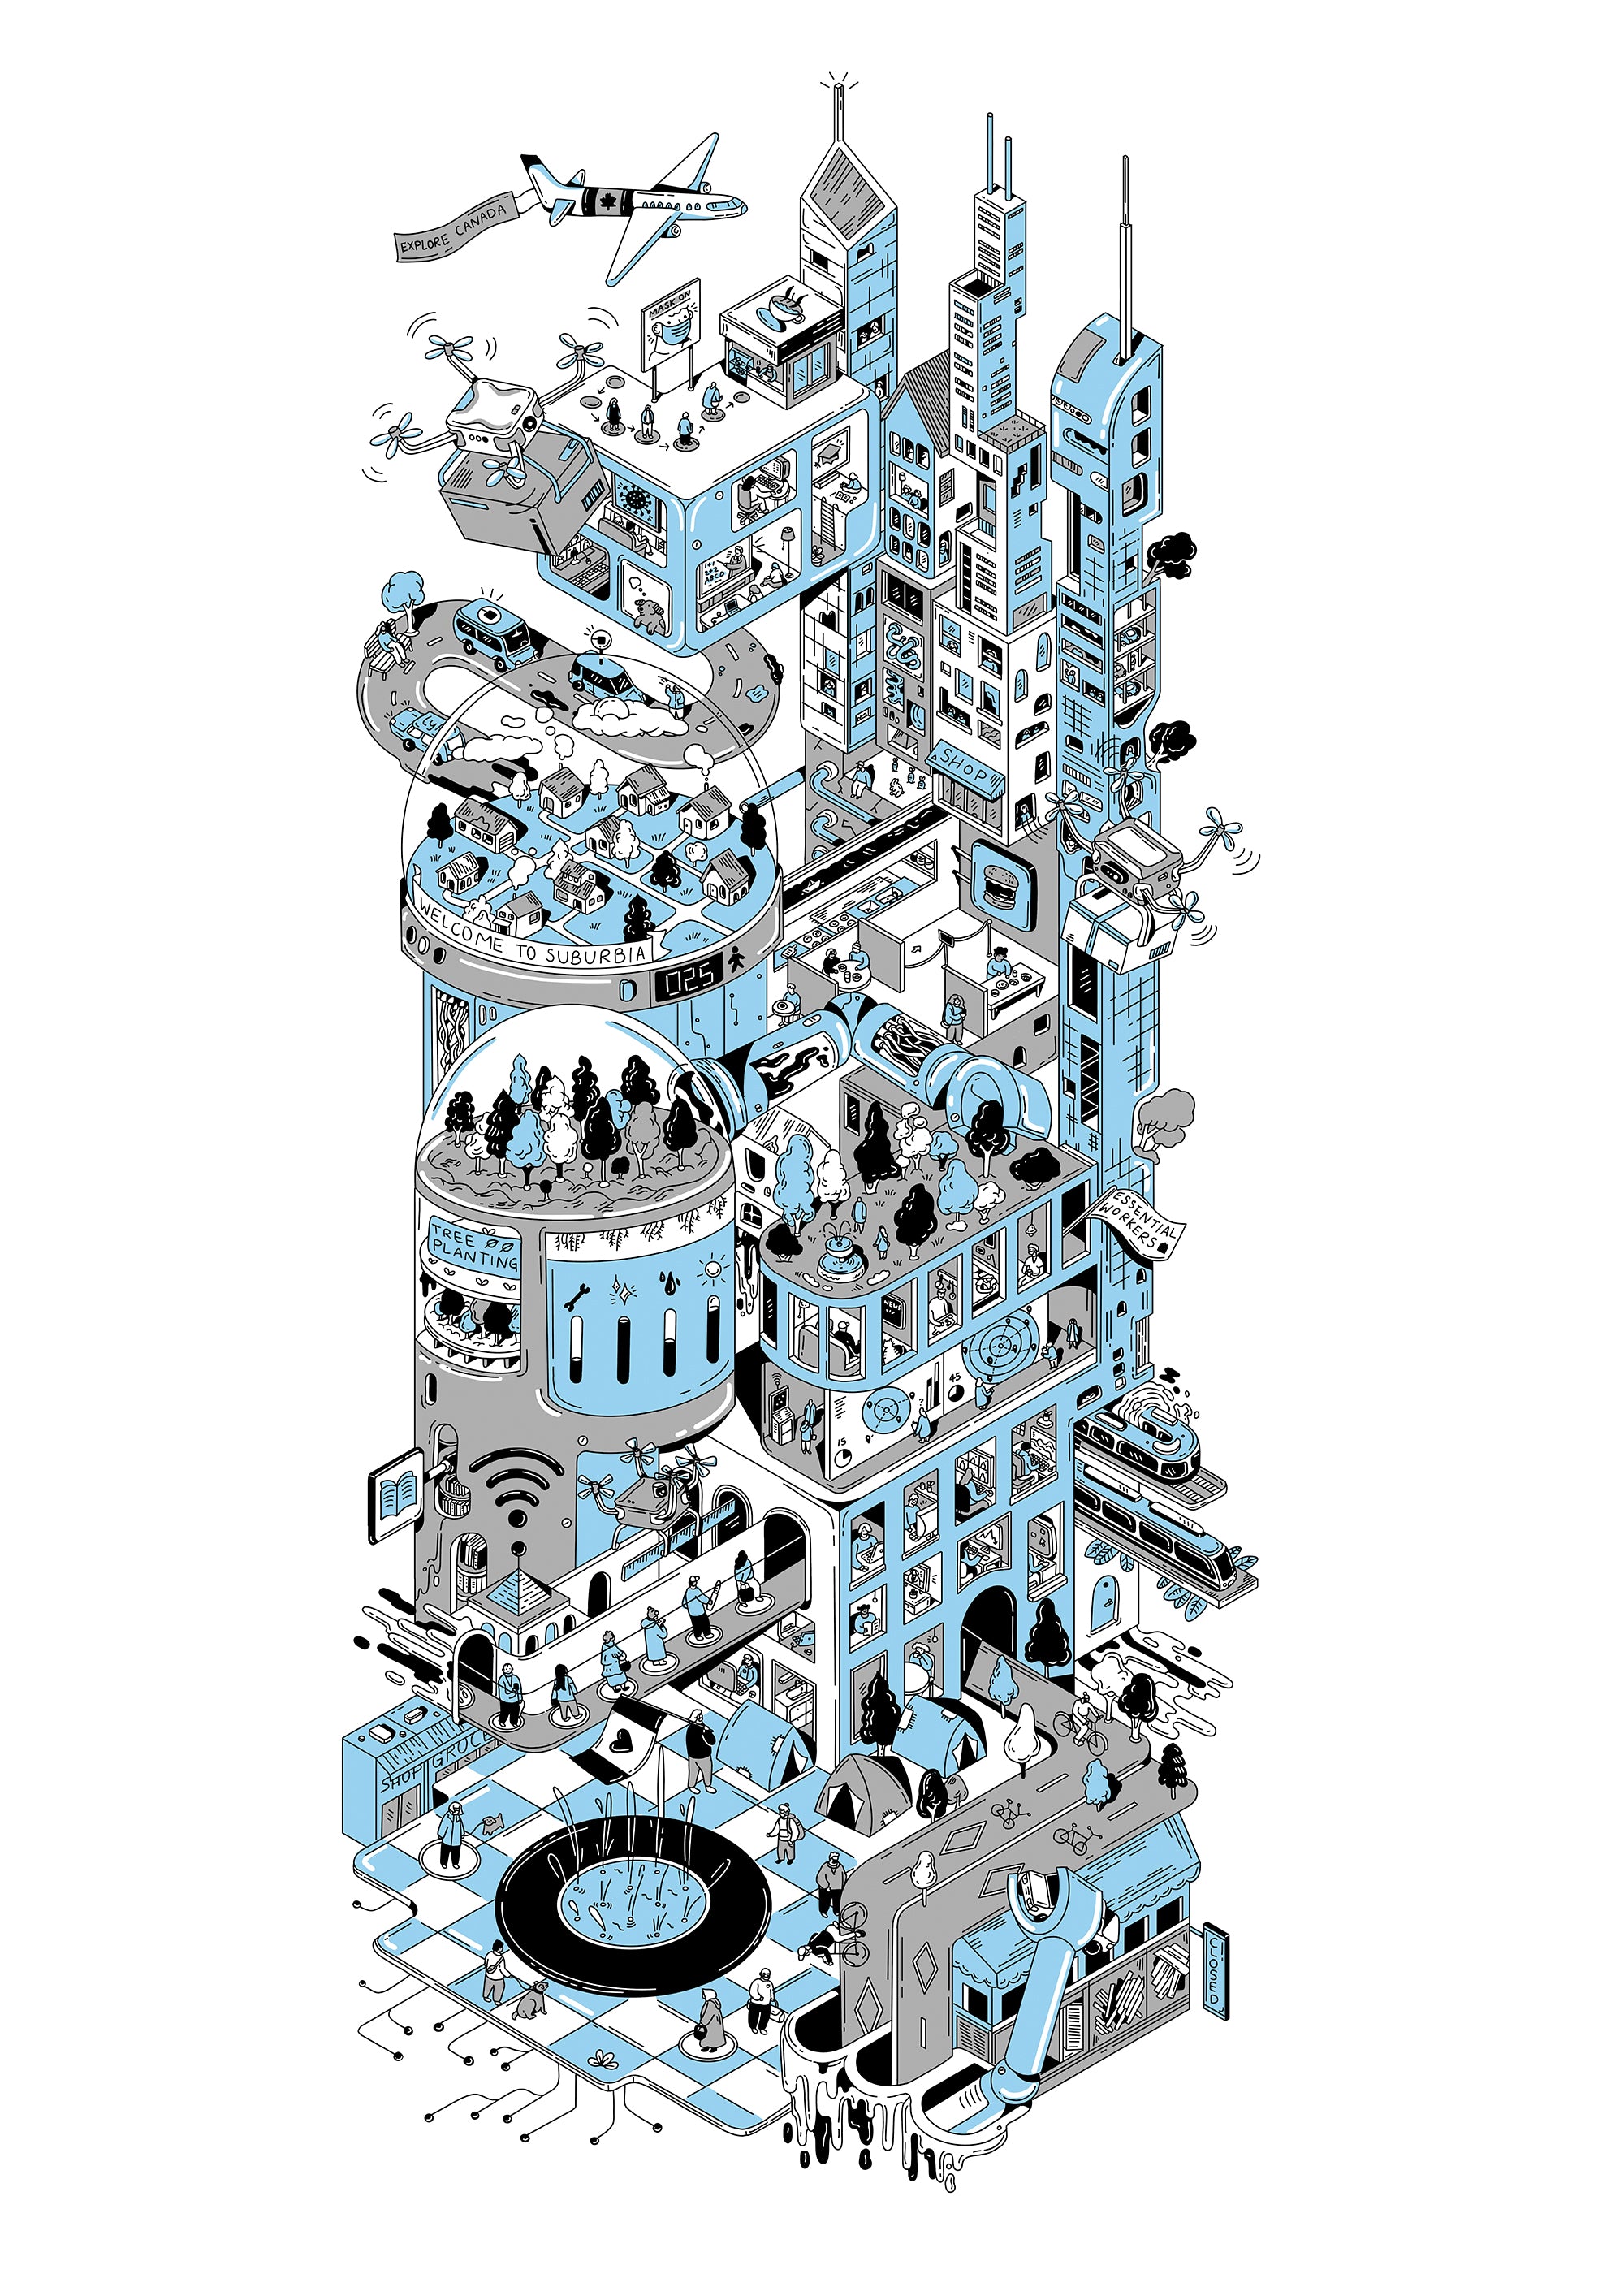 Future Cities | Illustrated Art Print